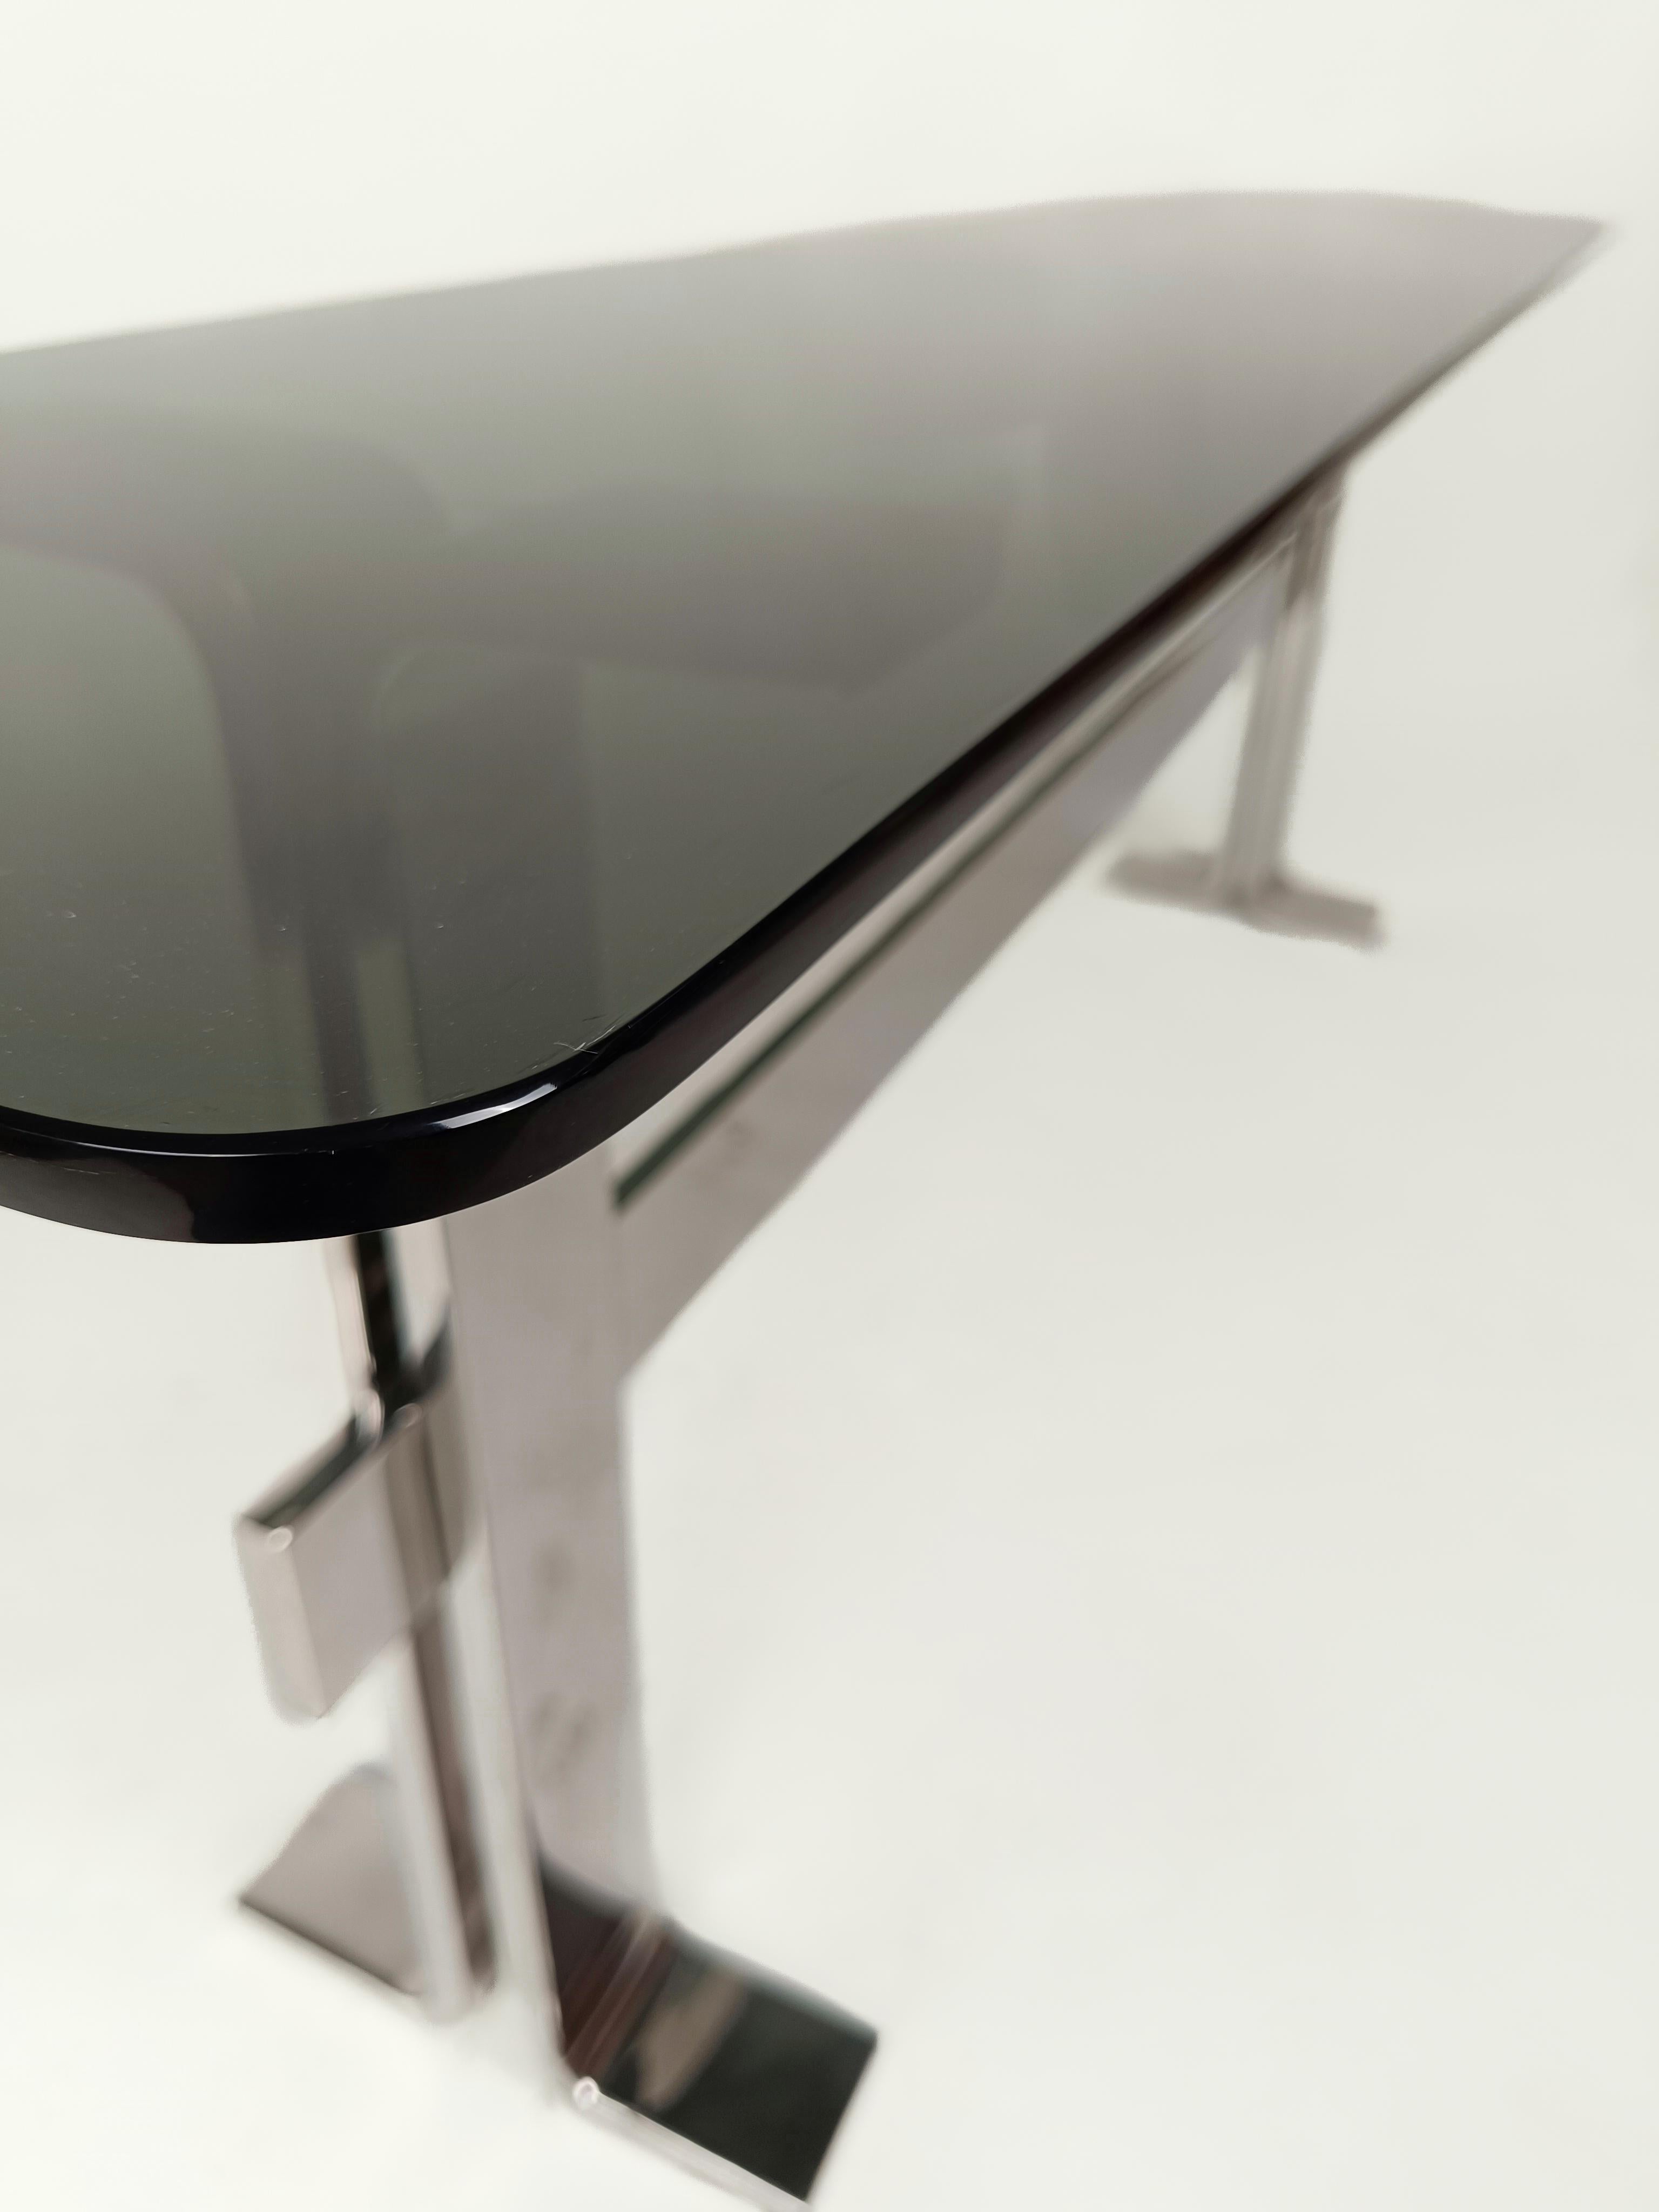  Italian 70s Console Table attributable to Saporiti in Chrome Metal, Smoke Glass 2